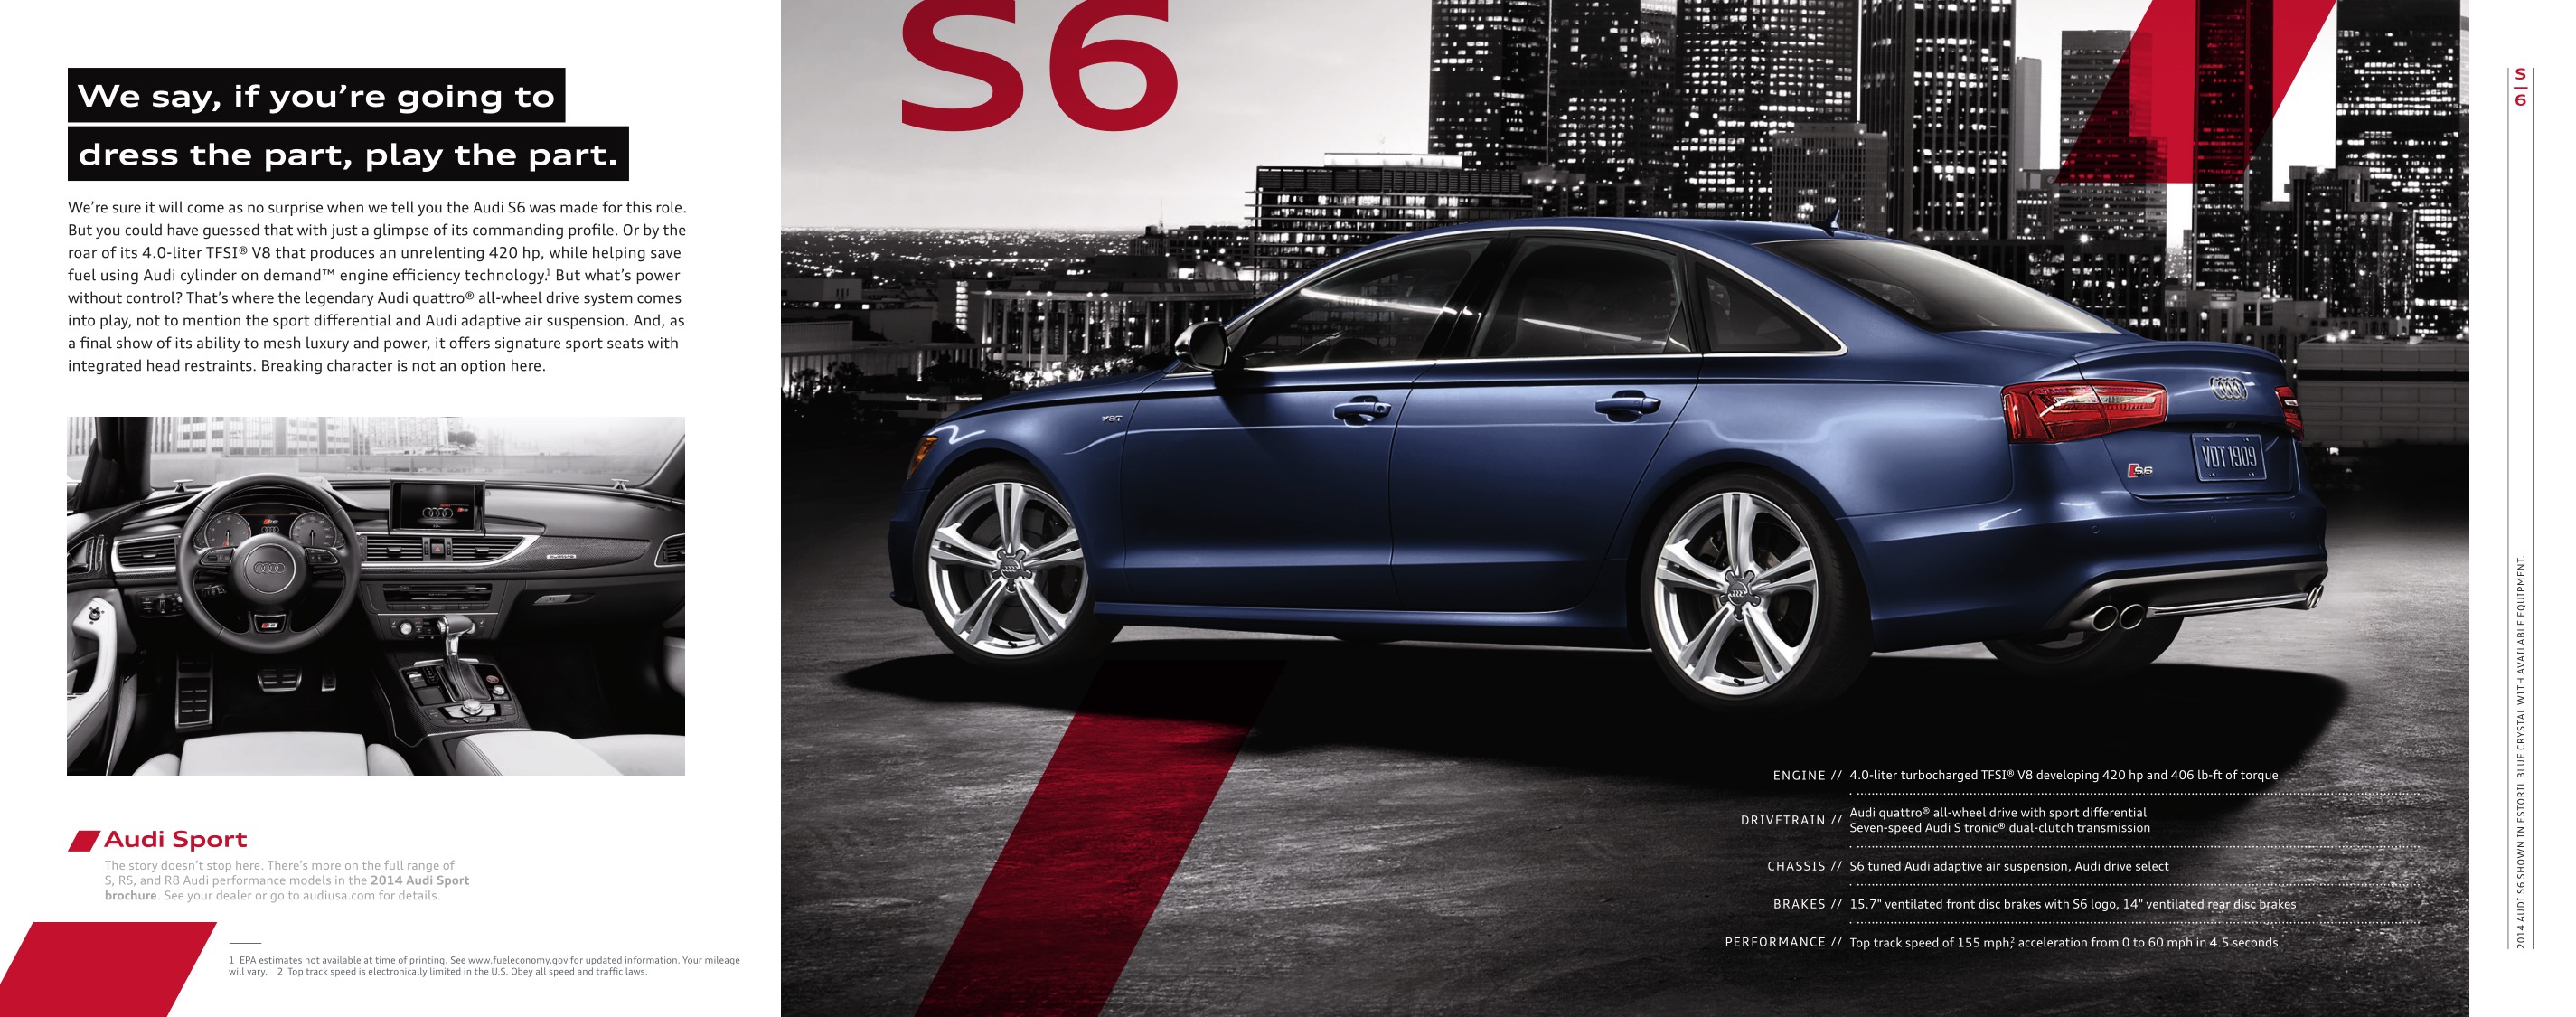 2014 Audi A6 Brochure Page 31